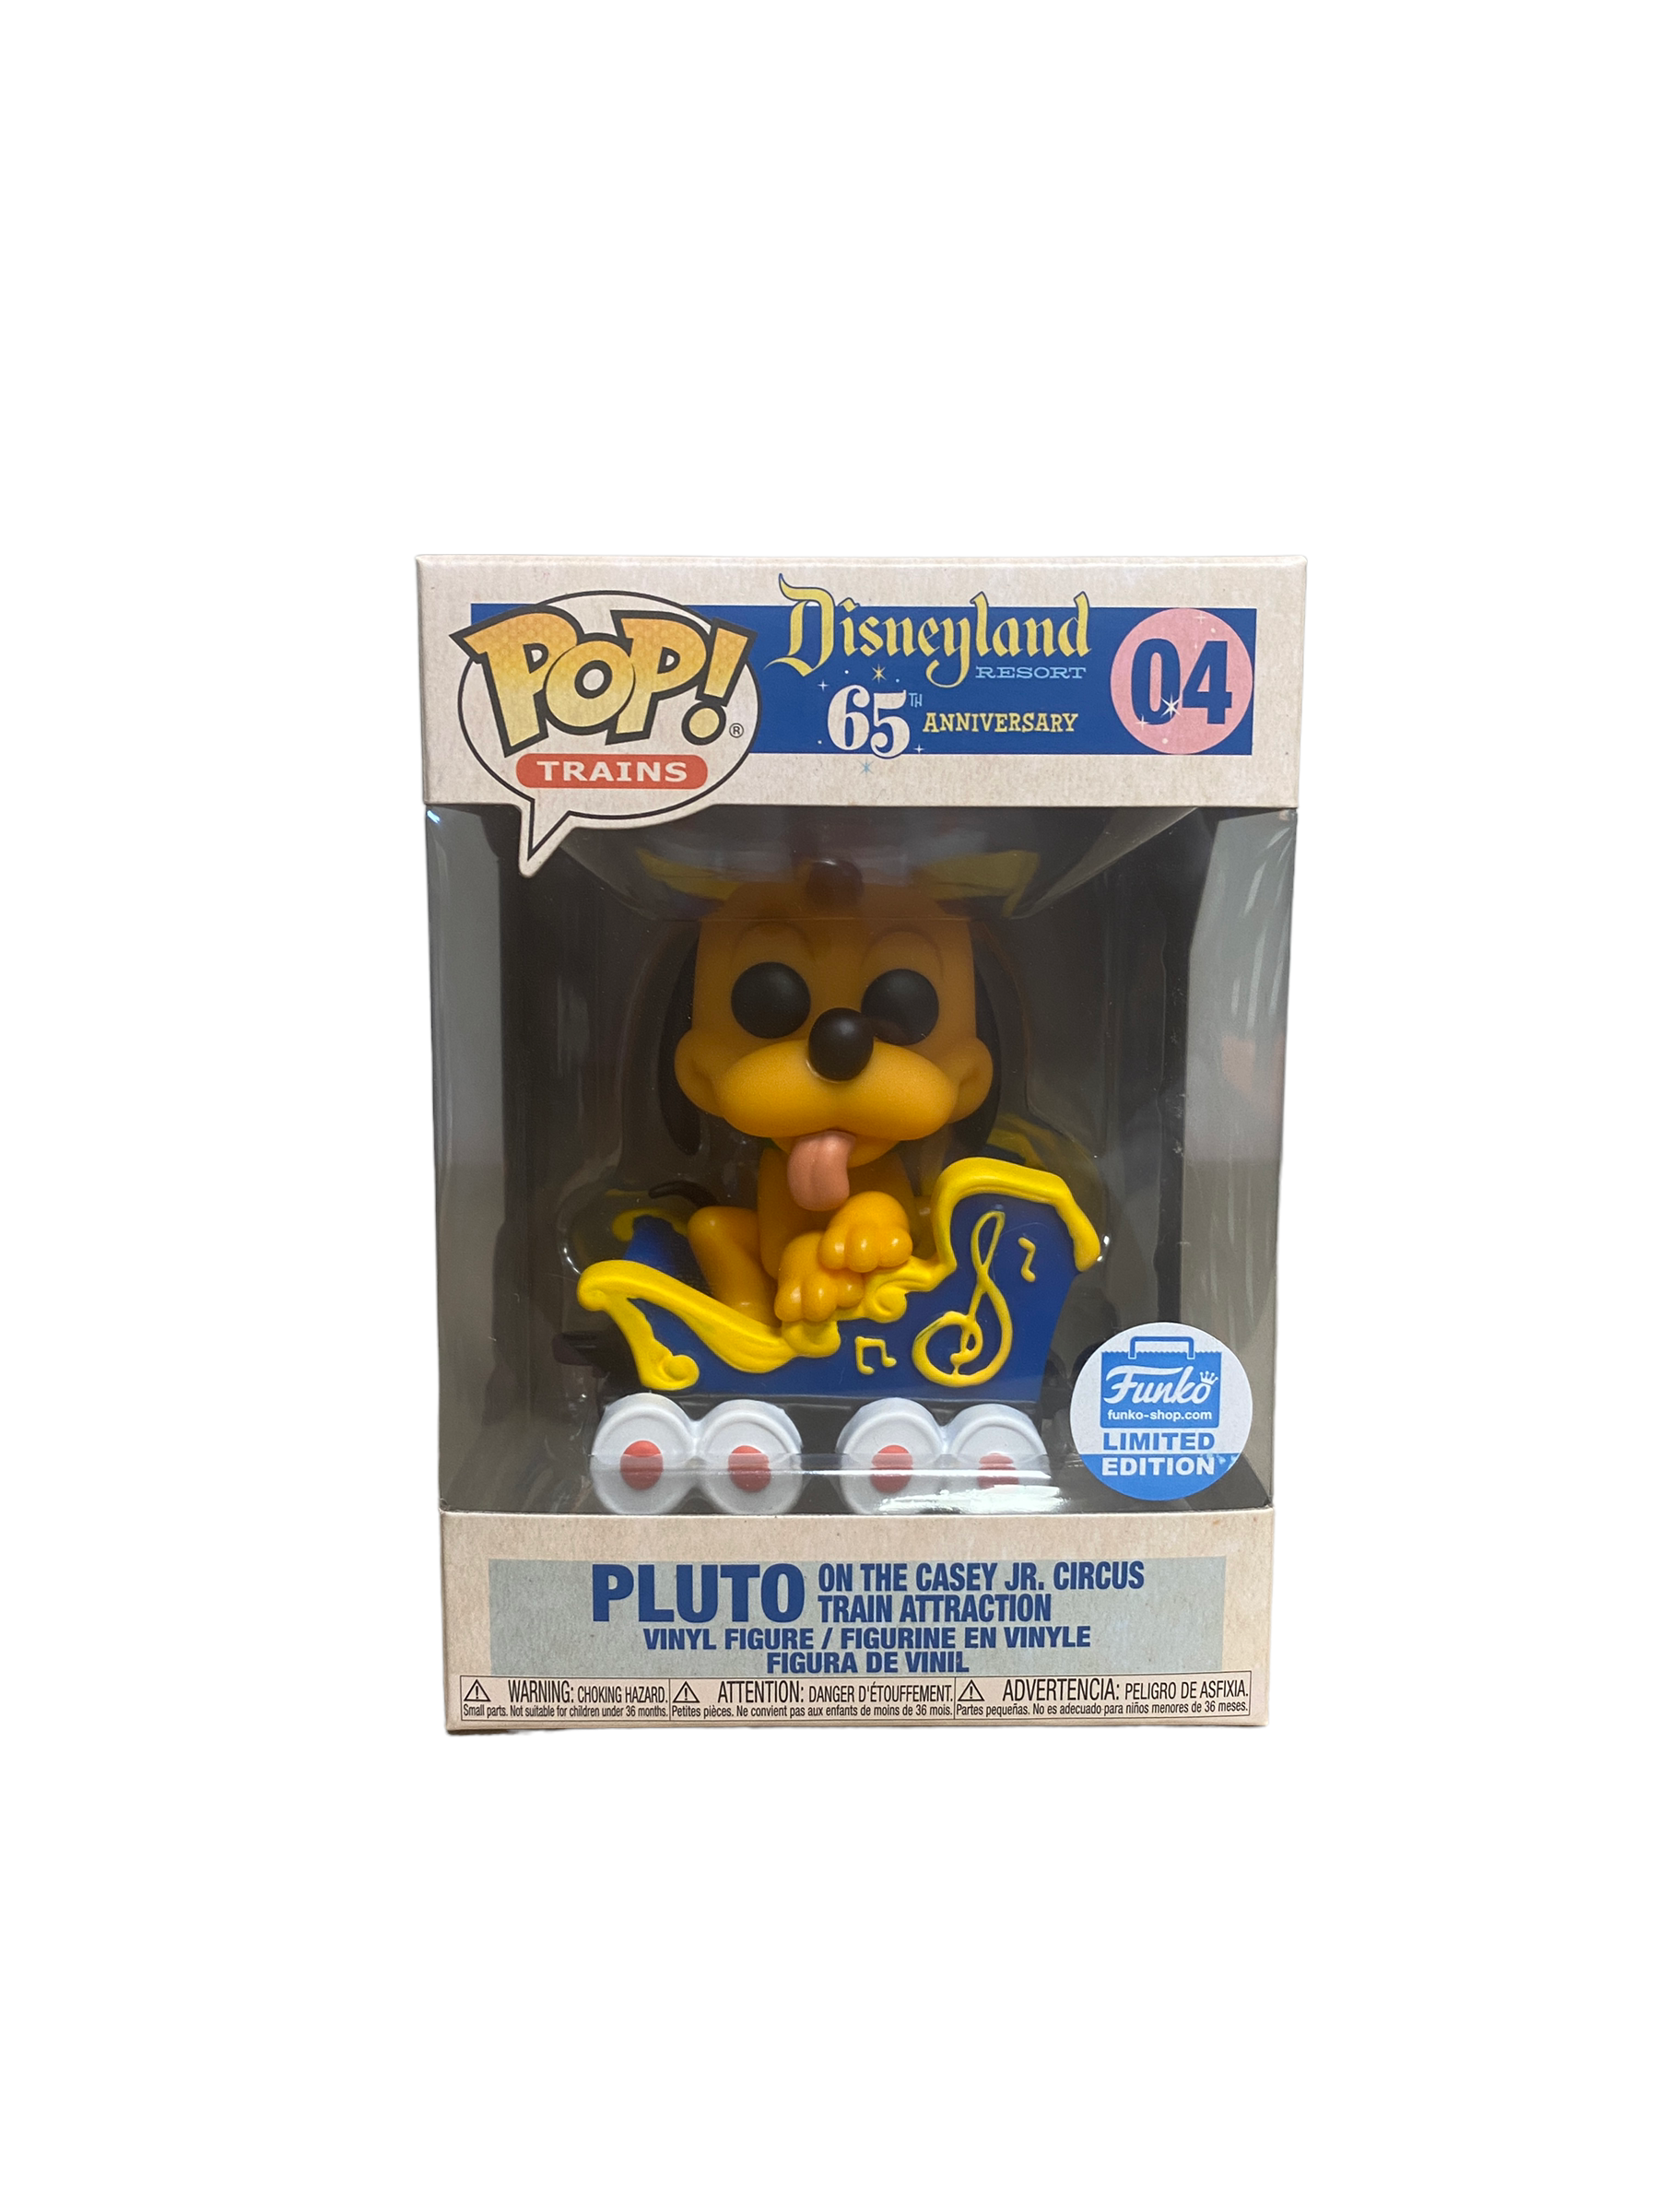 Pluto On The Casey Jr. Circus Train Attraction #04 Funko Pop! - Disneyland Resort 65th Anniversary - Funko Shop Exclusive - Condition 9.5/10